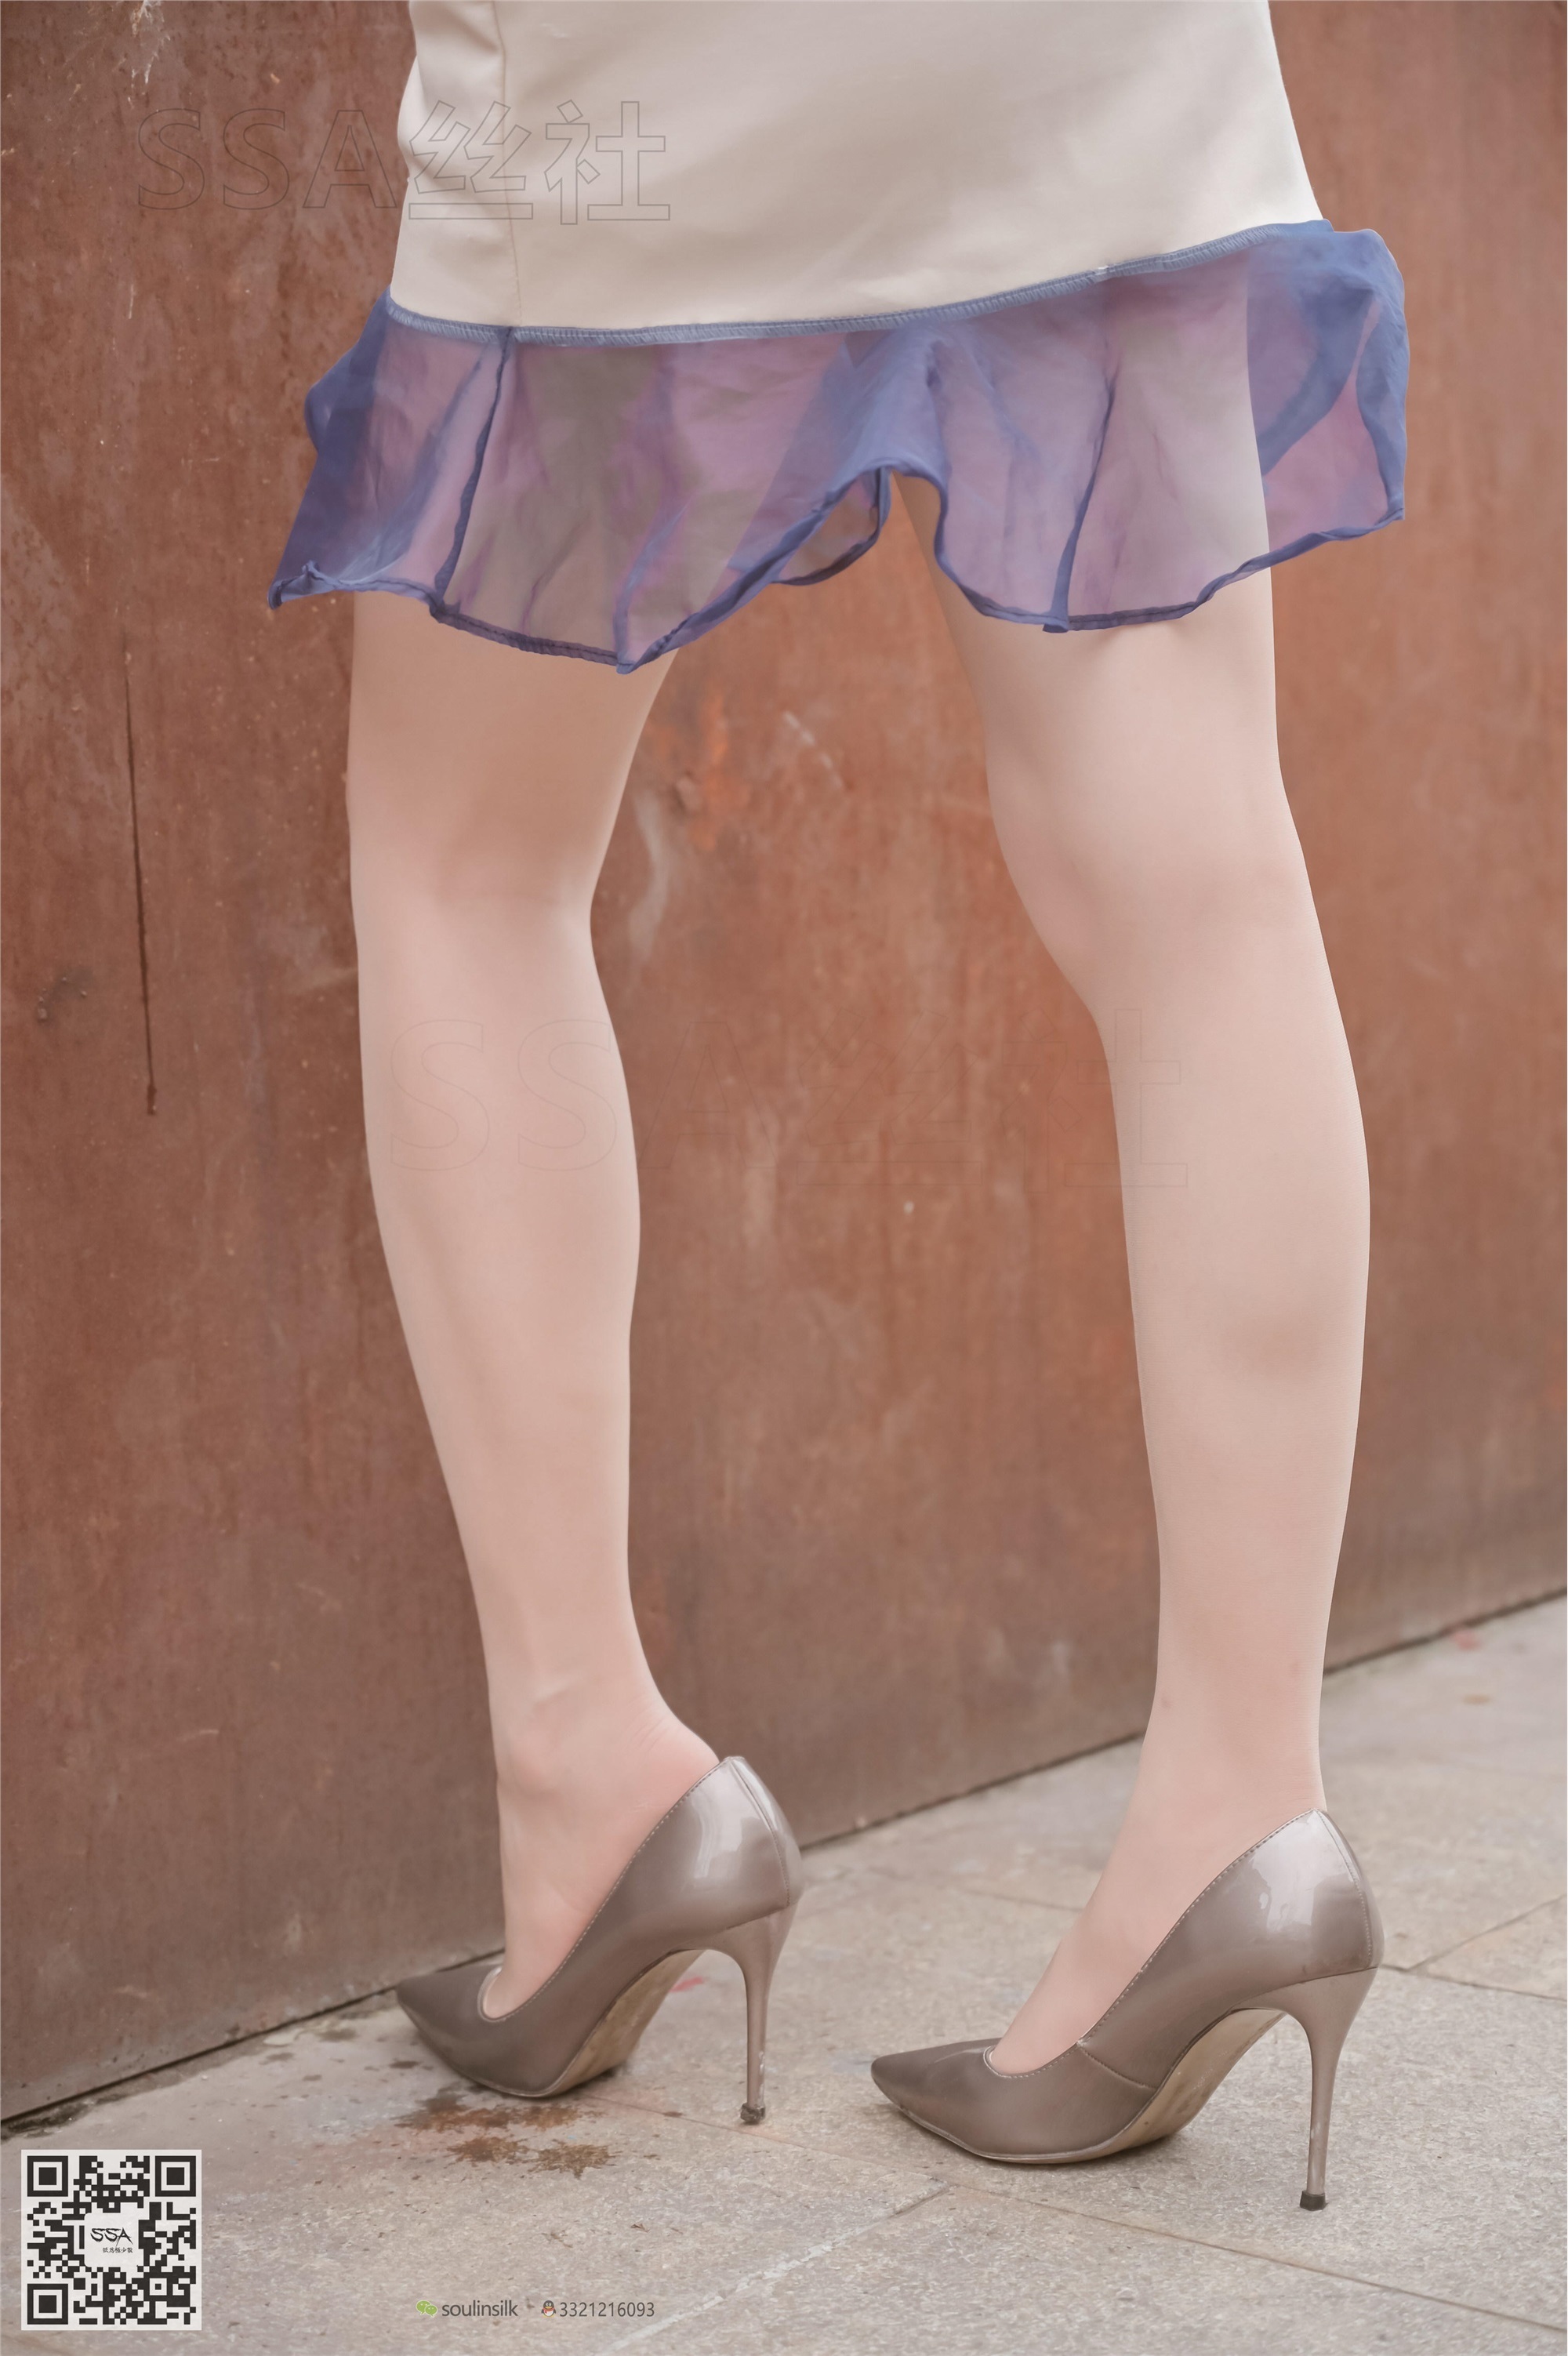 SSA silk society 099 Sydney Street short skirt stockings